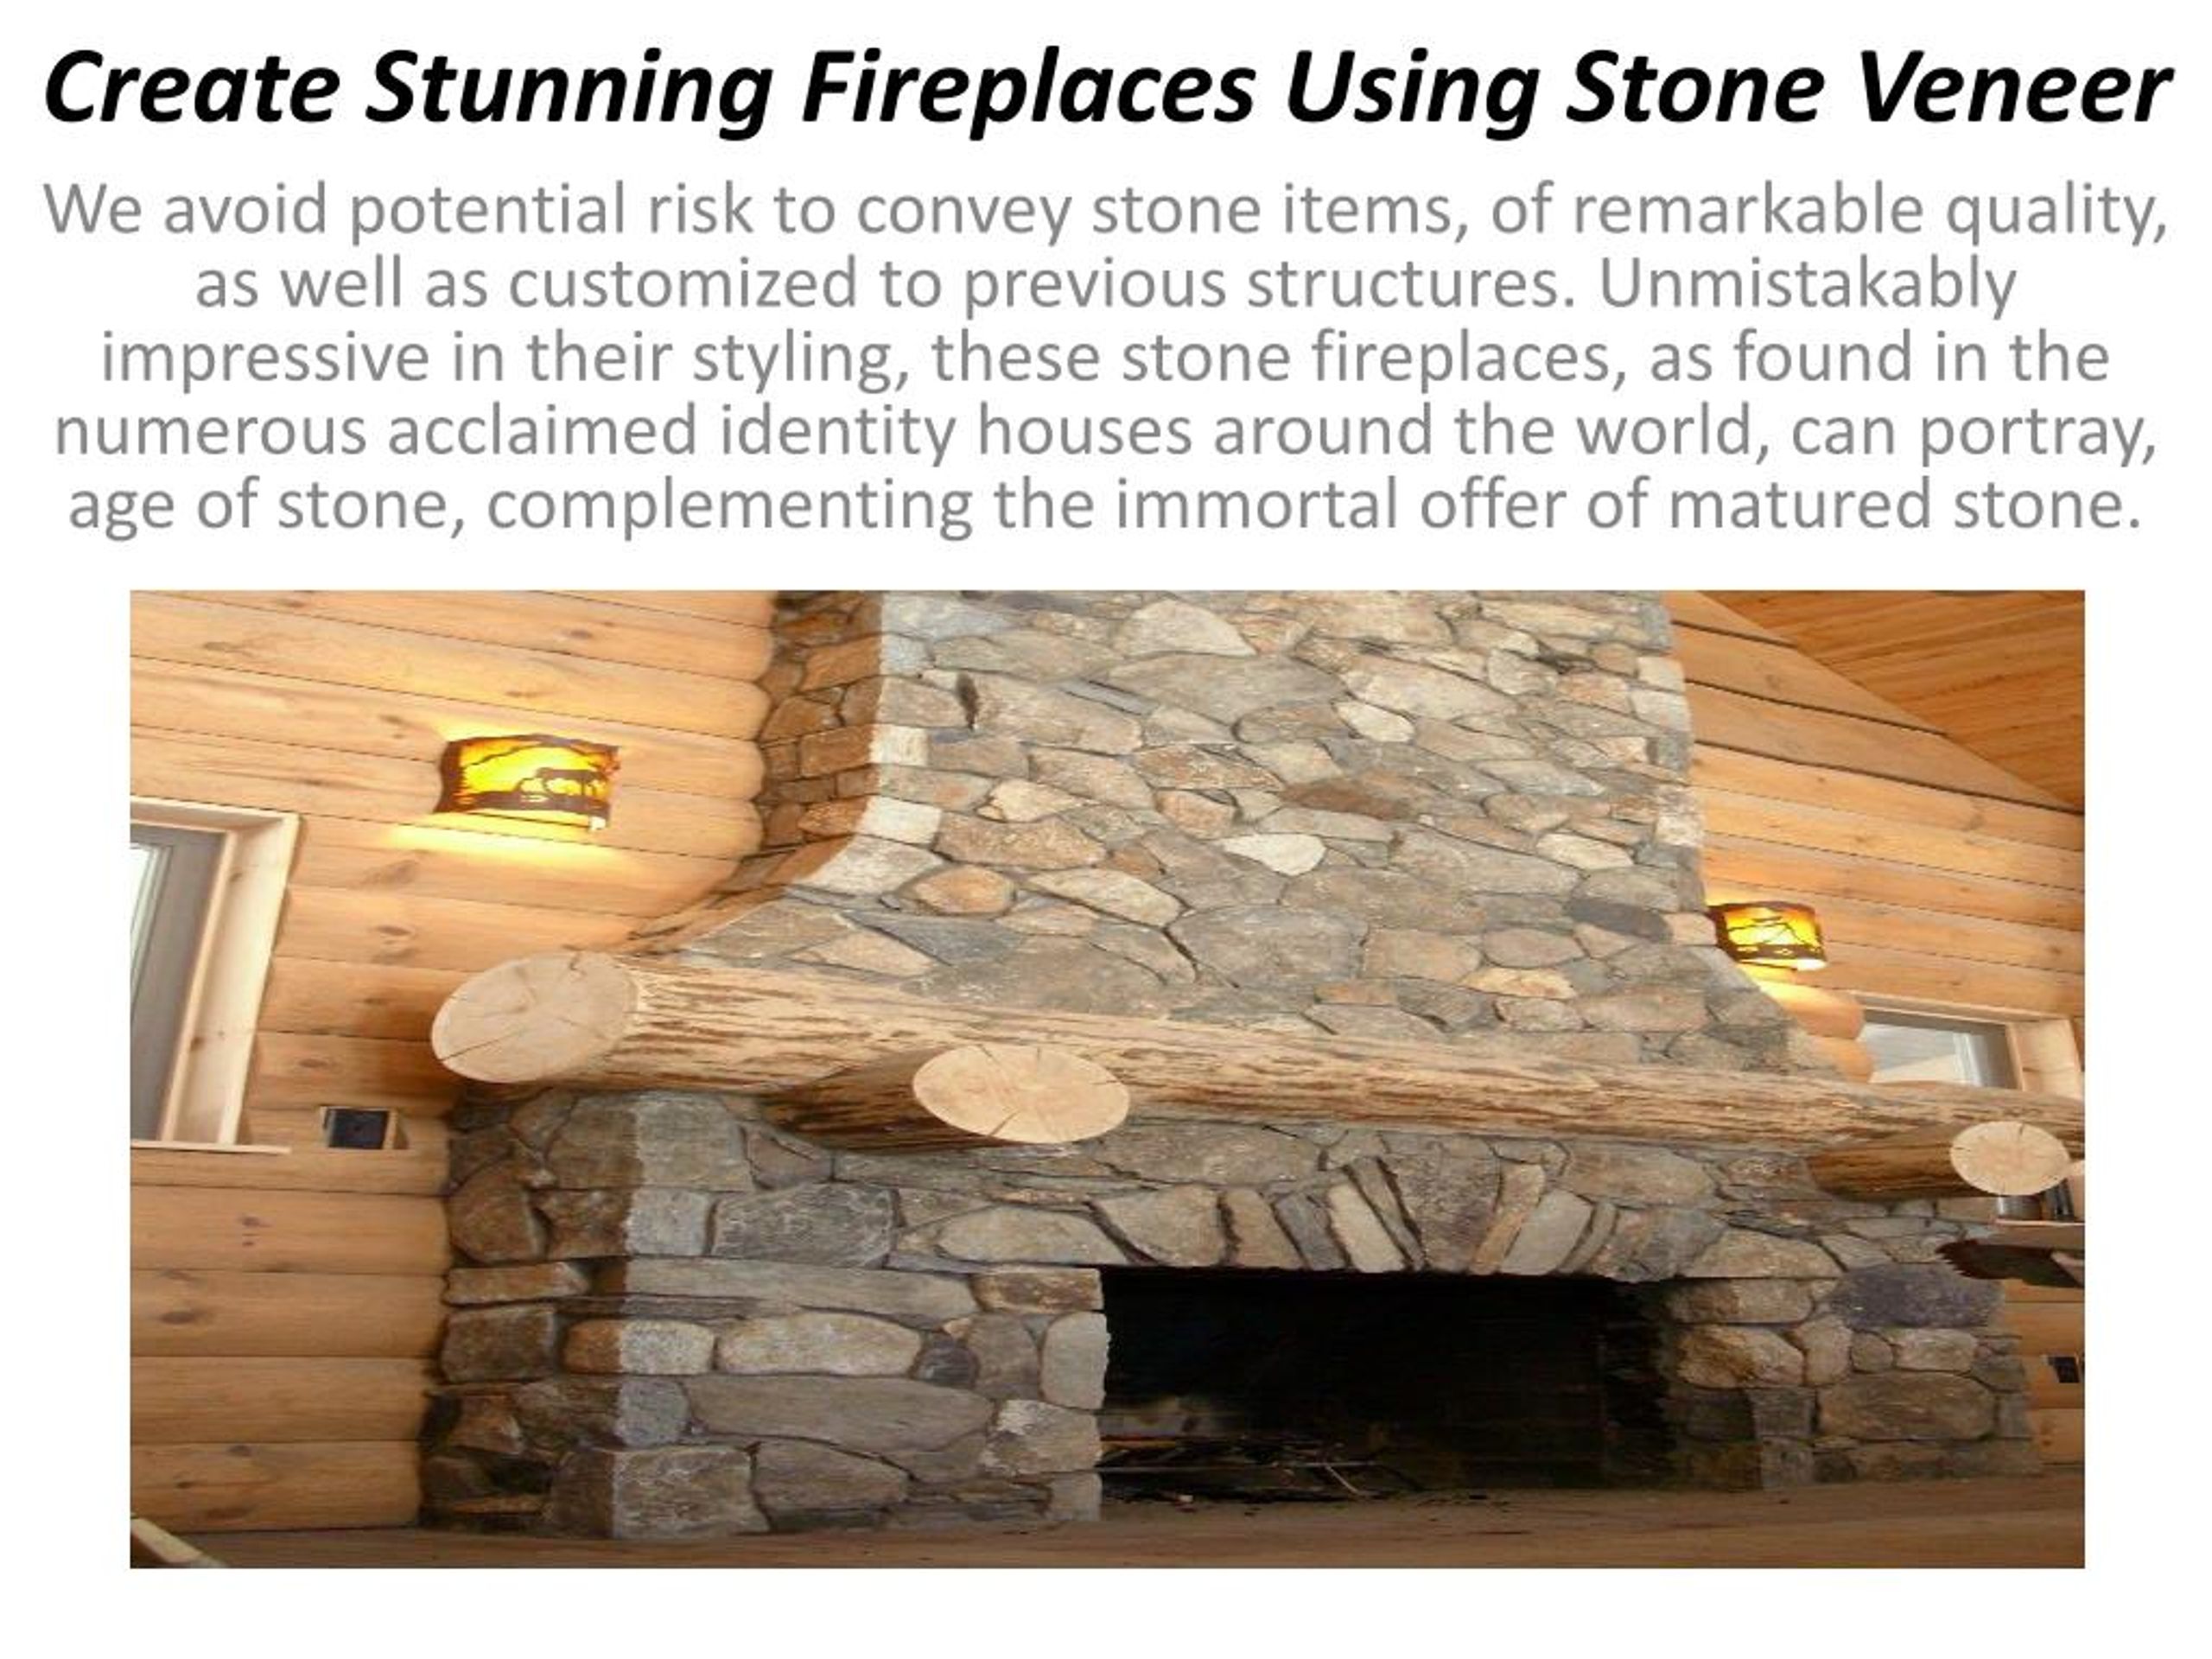 creative writing description of fireplace stone